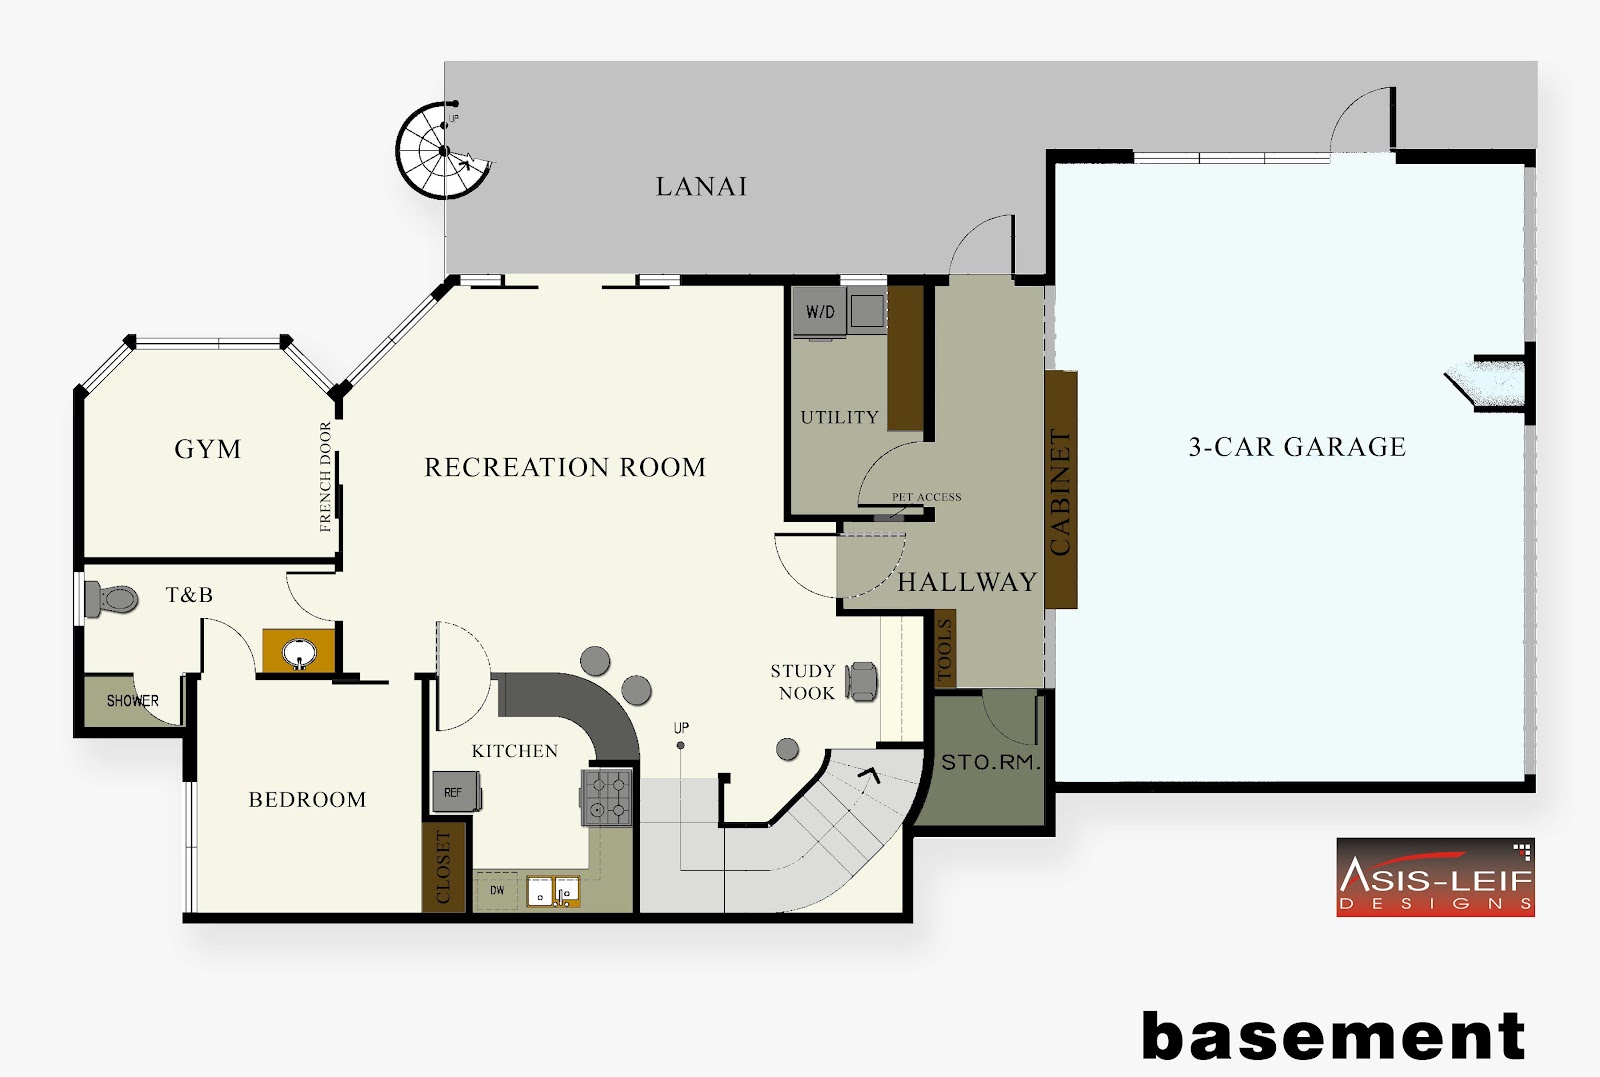 basement floor plans ideas photo - 6